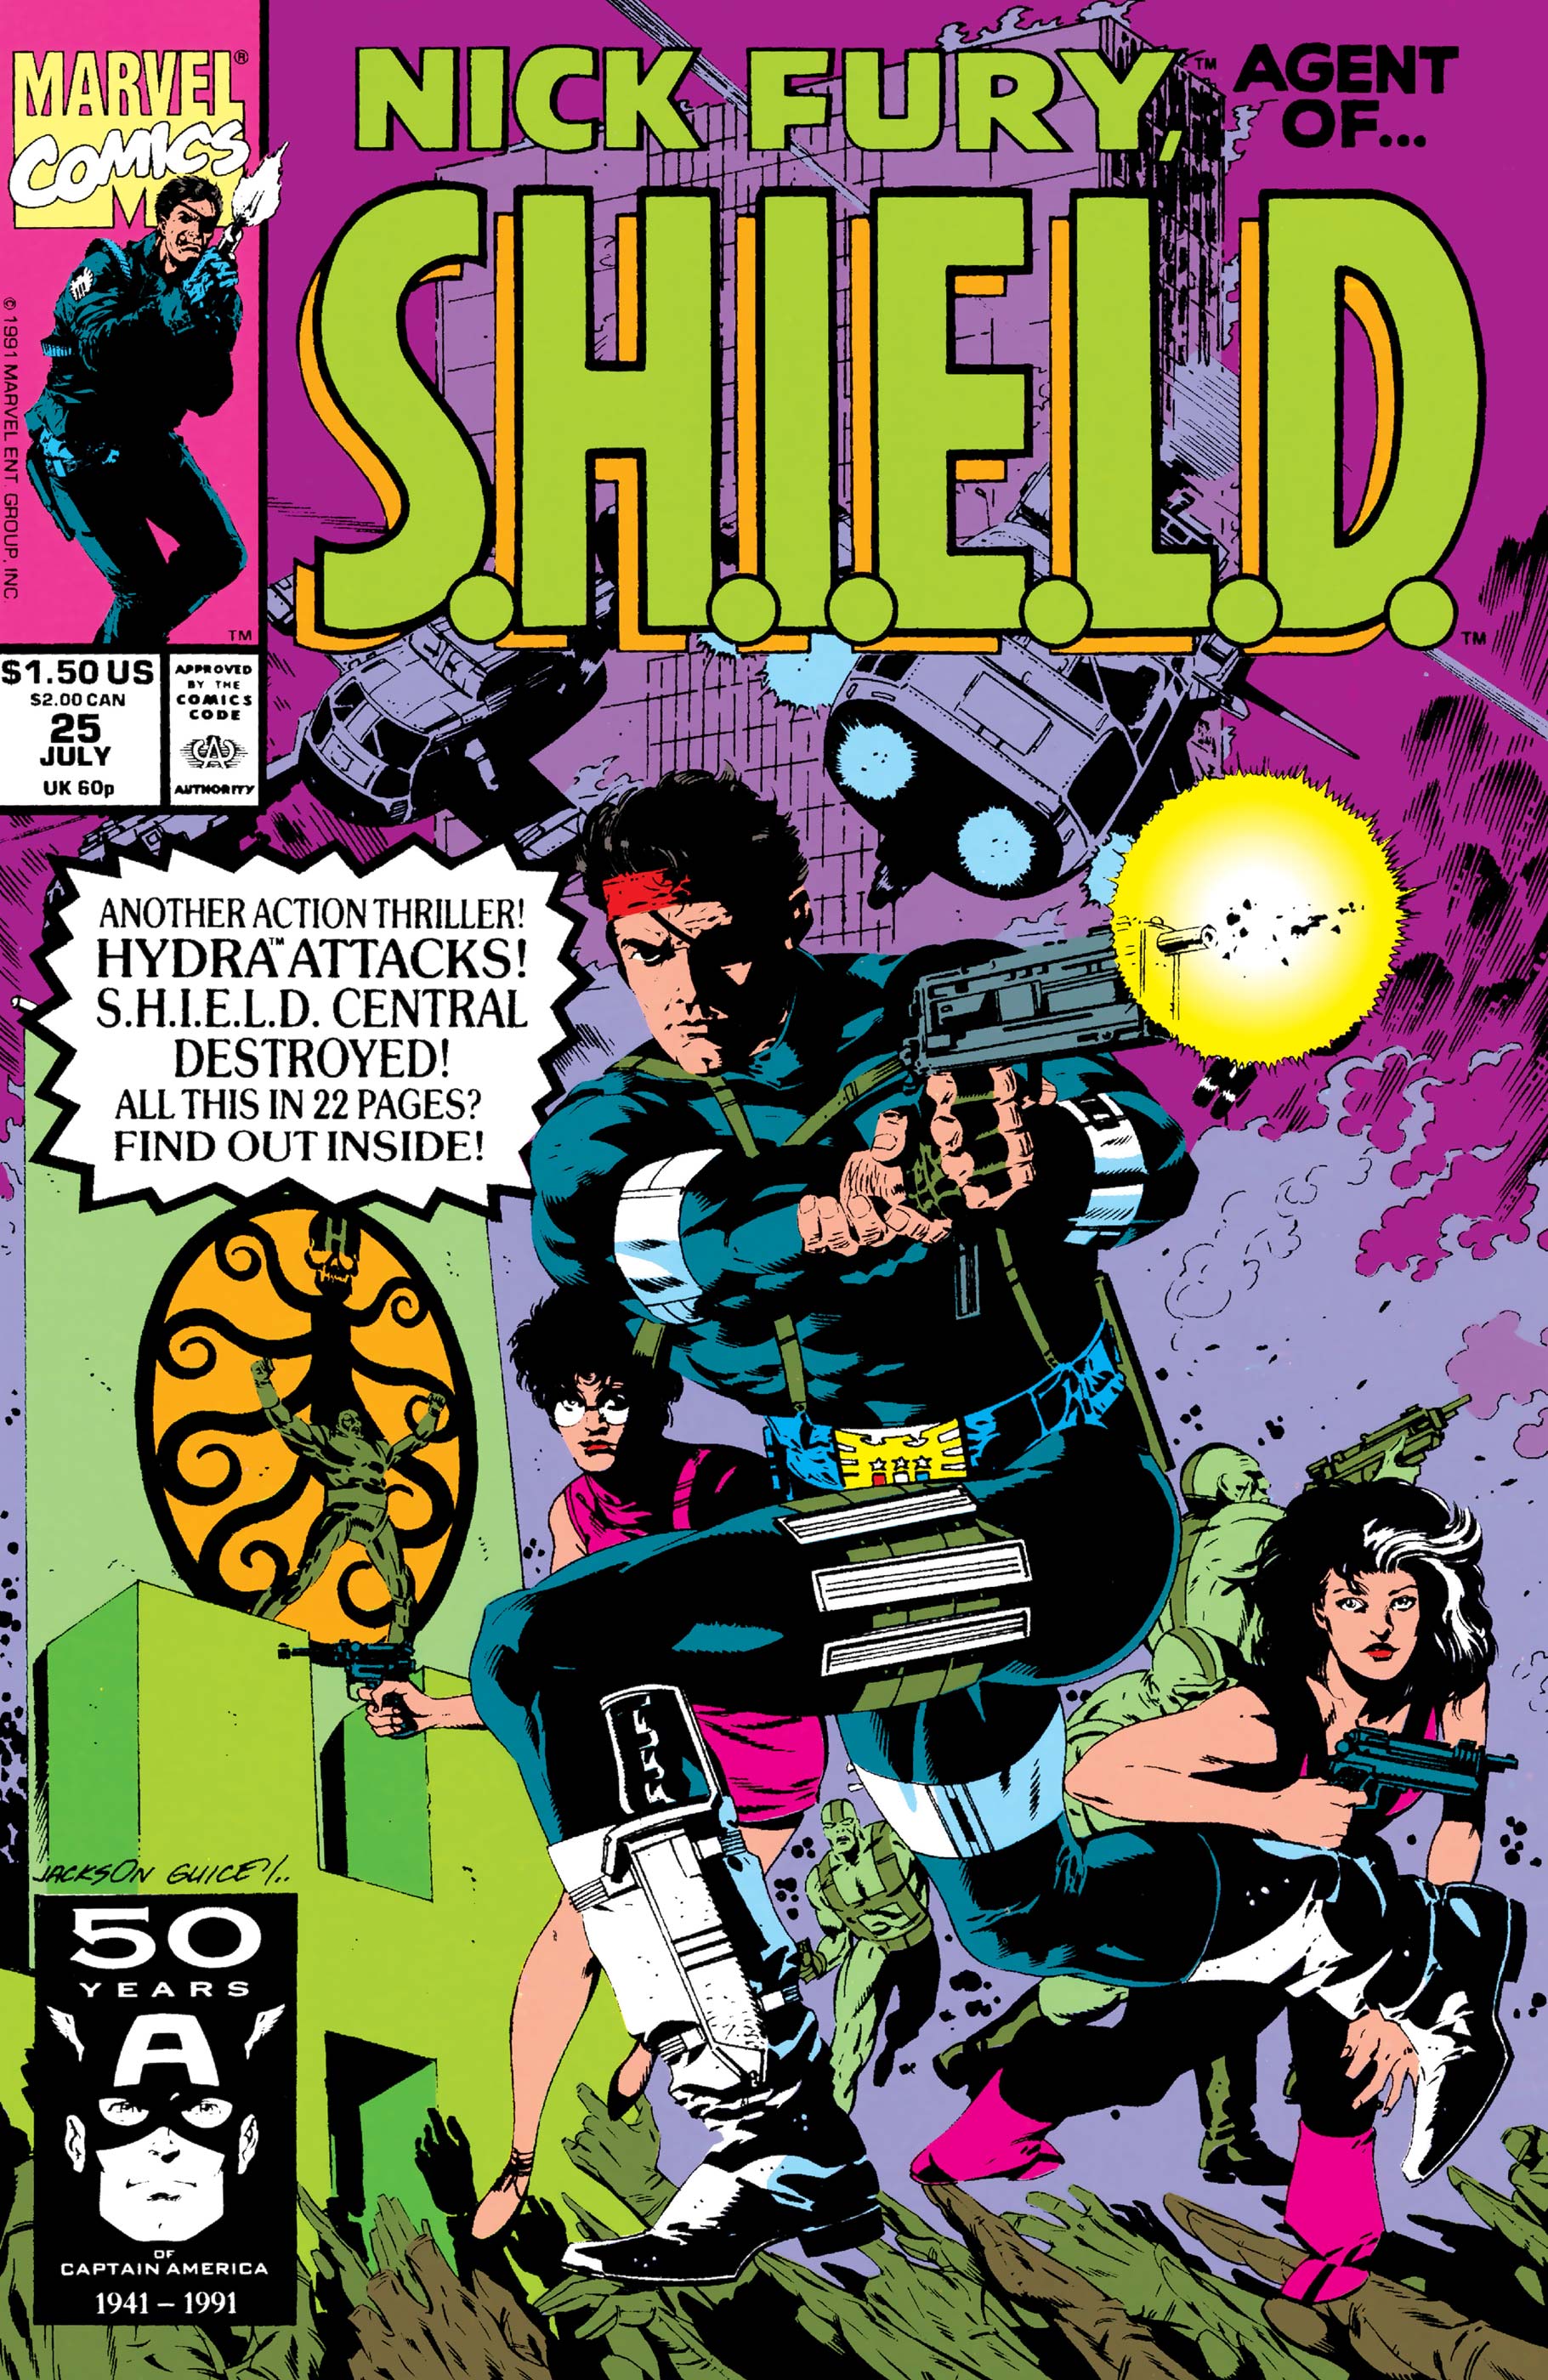 Nick Fury, Agent of S.H.I.E.L.D. (1989) #25